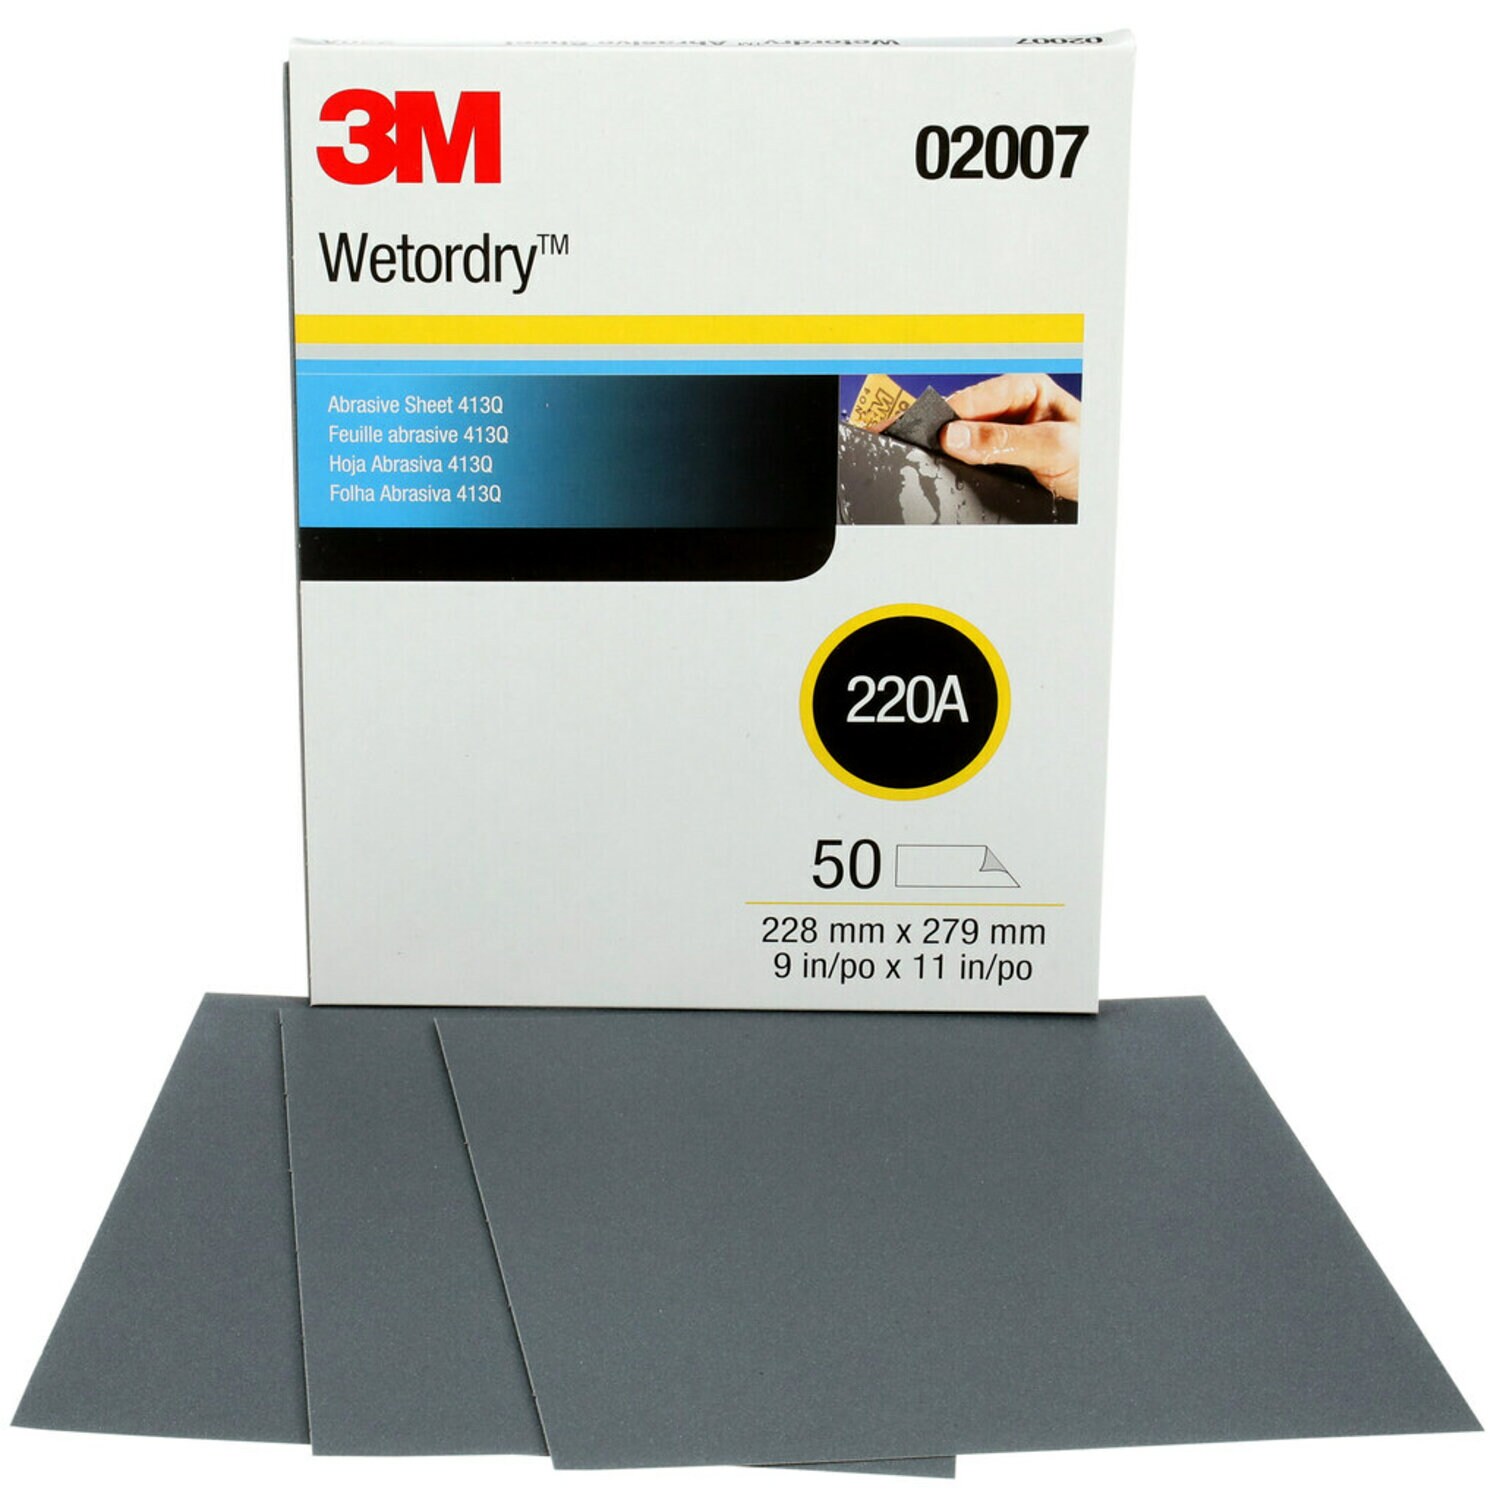 7000148224 - 3M Wetordry Abrasive Sheet 413Q, 02007, 220, 9 in x 11 in, 50 sheets
per carton, 5 cartons per case